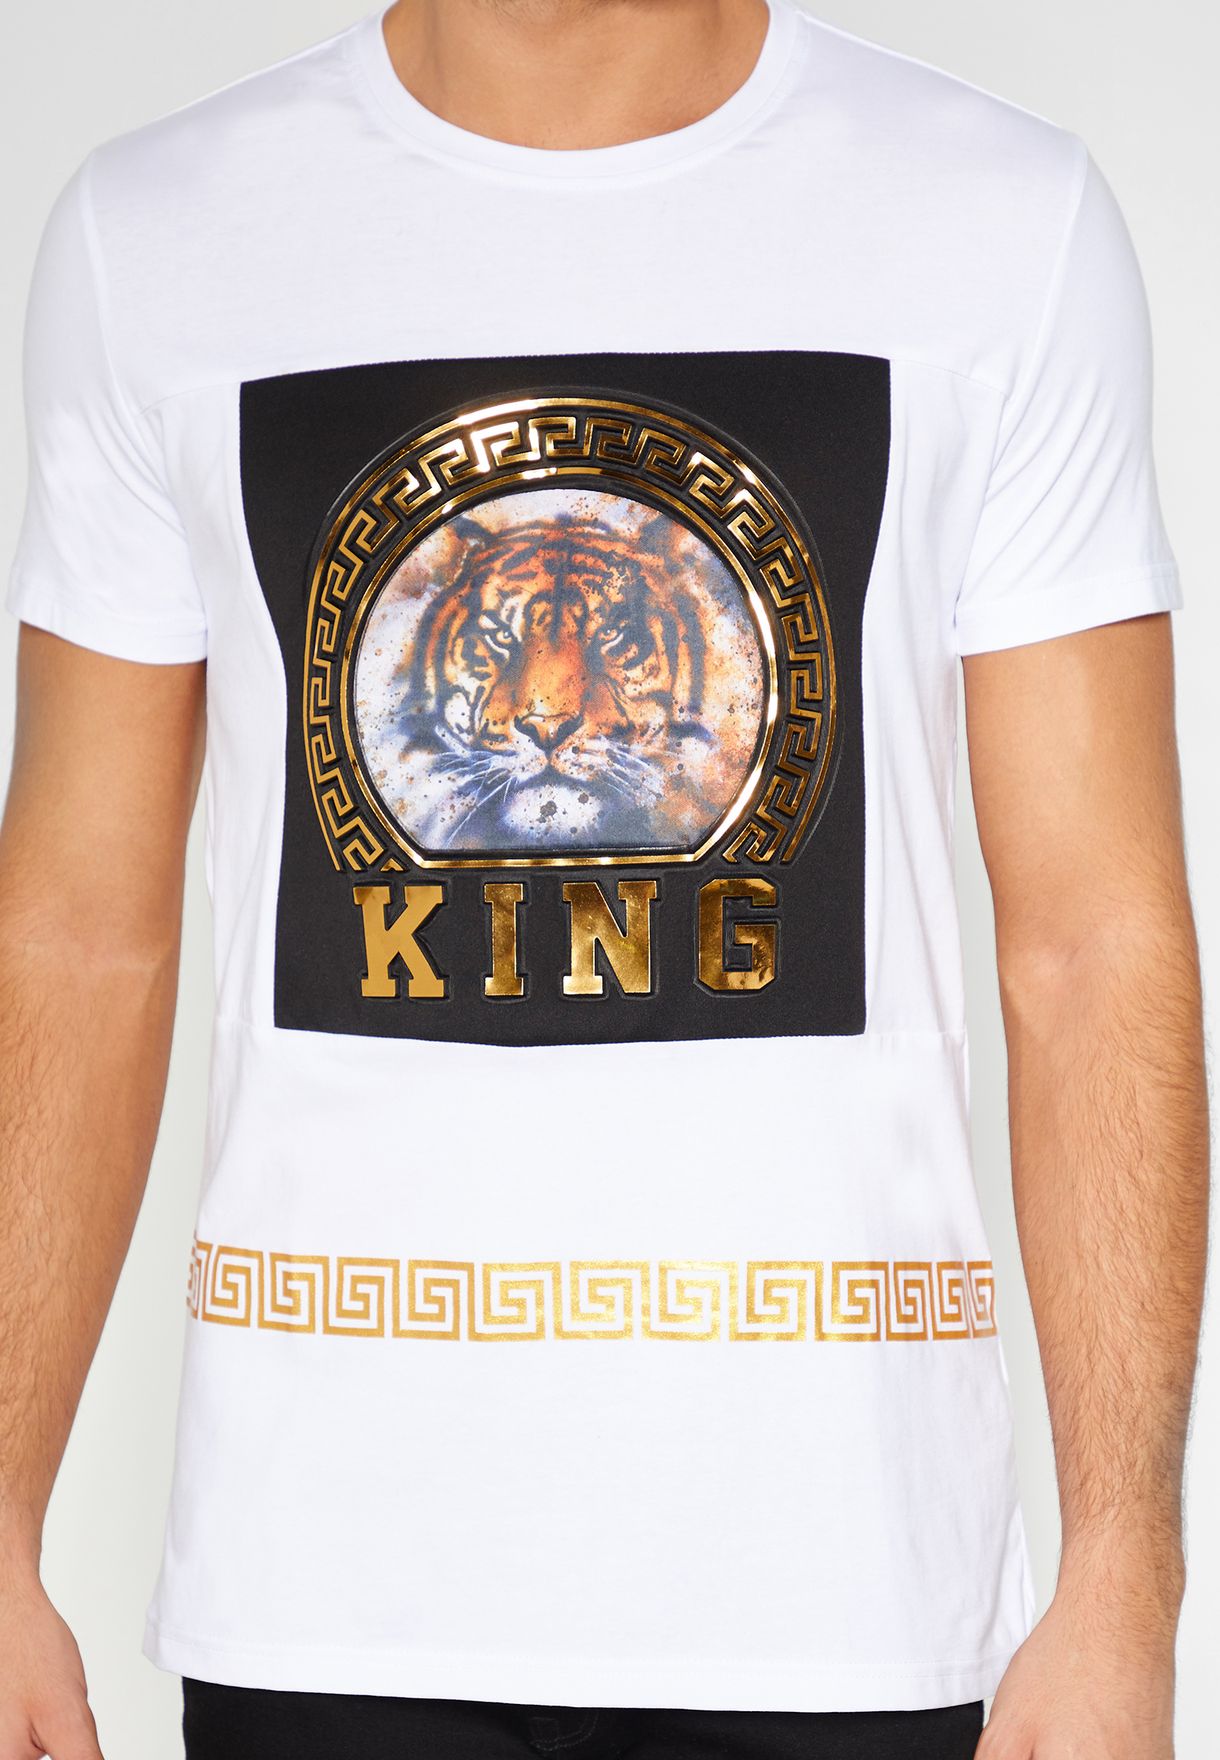 king tiger t shirt